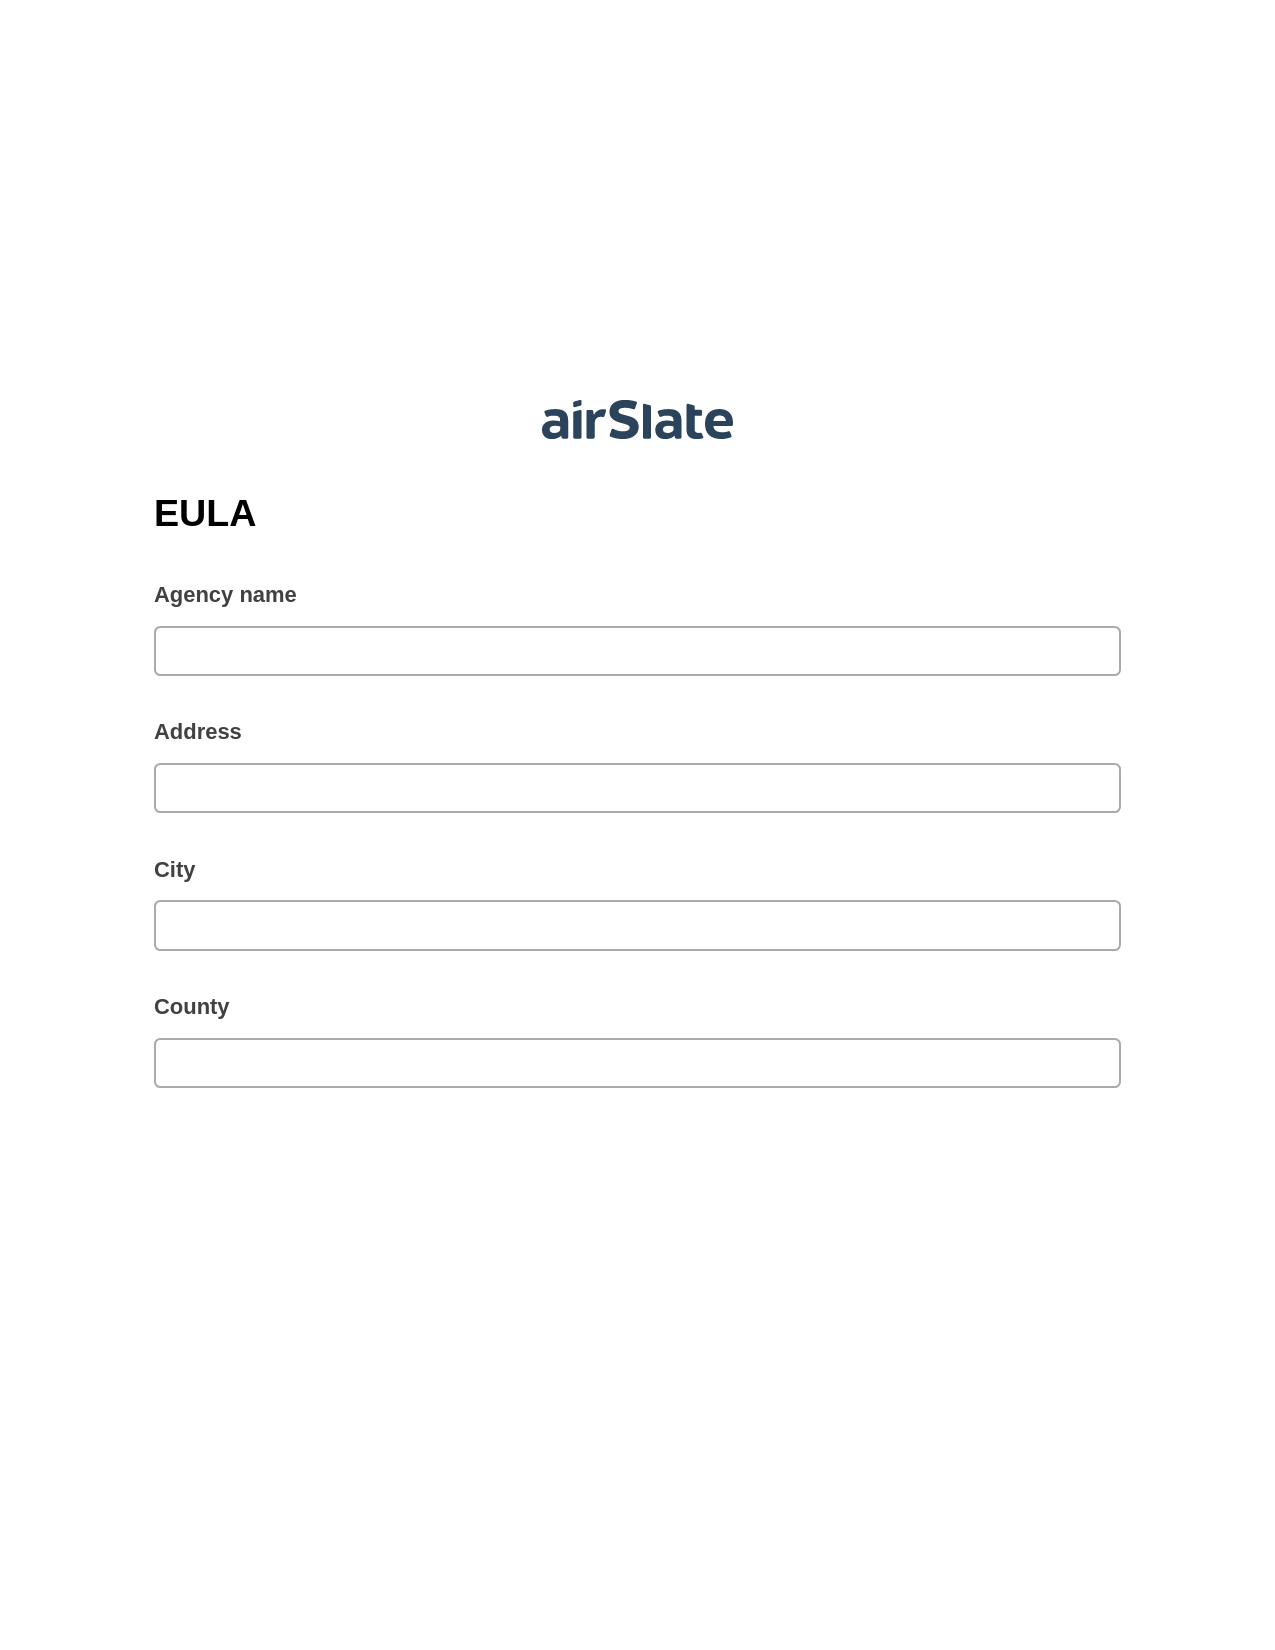 EULA Pre-fill from Google Sheet Dropdown Options Bot, Email Notification Bot, Box Bot